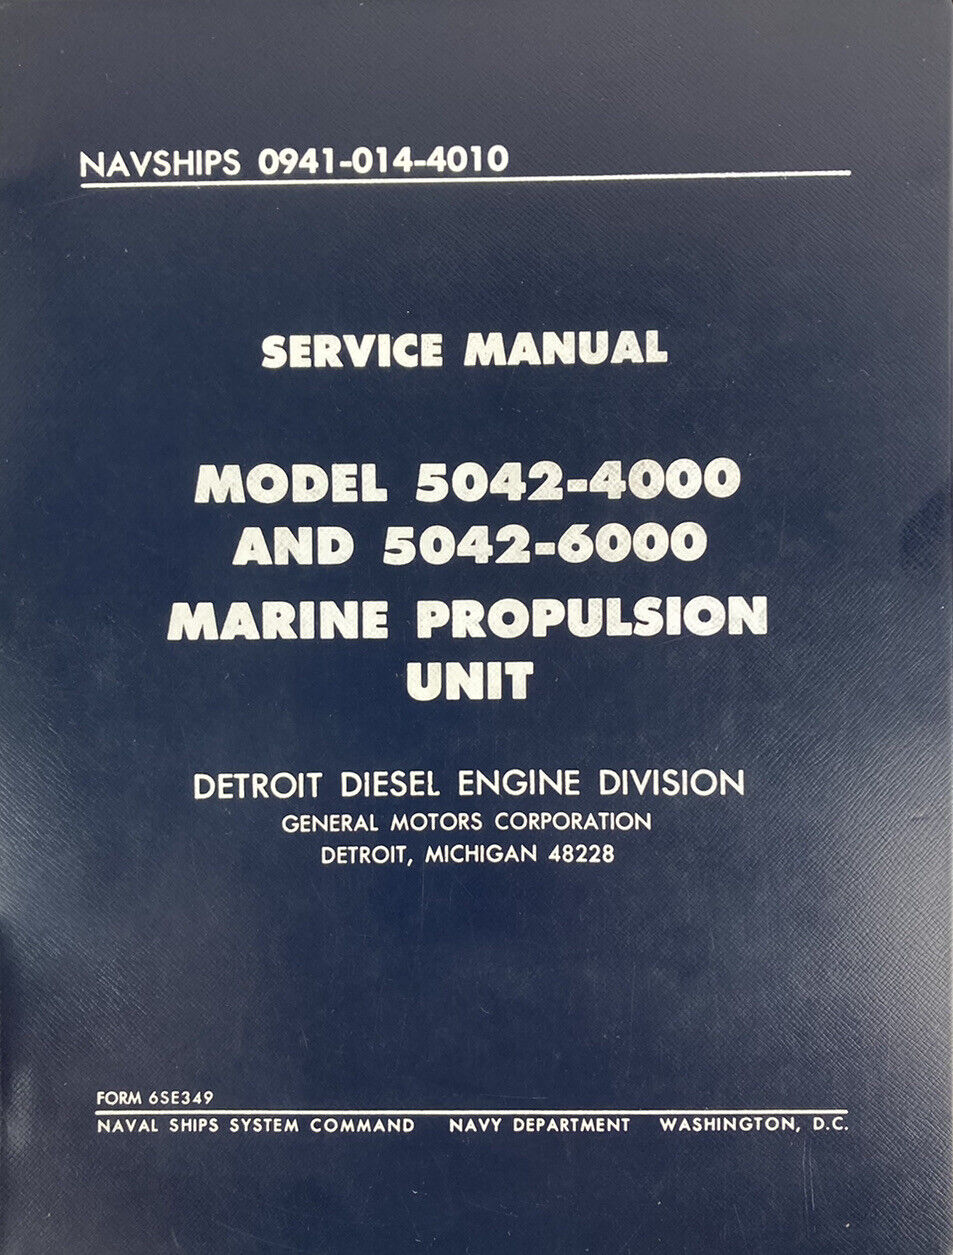 Us Navy Navships Service Manual Detroit Diesel Marine Propulsion Unit 1963 1969